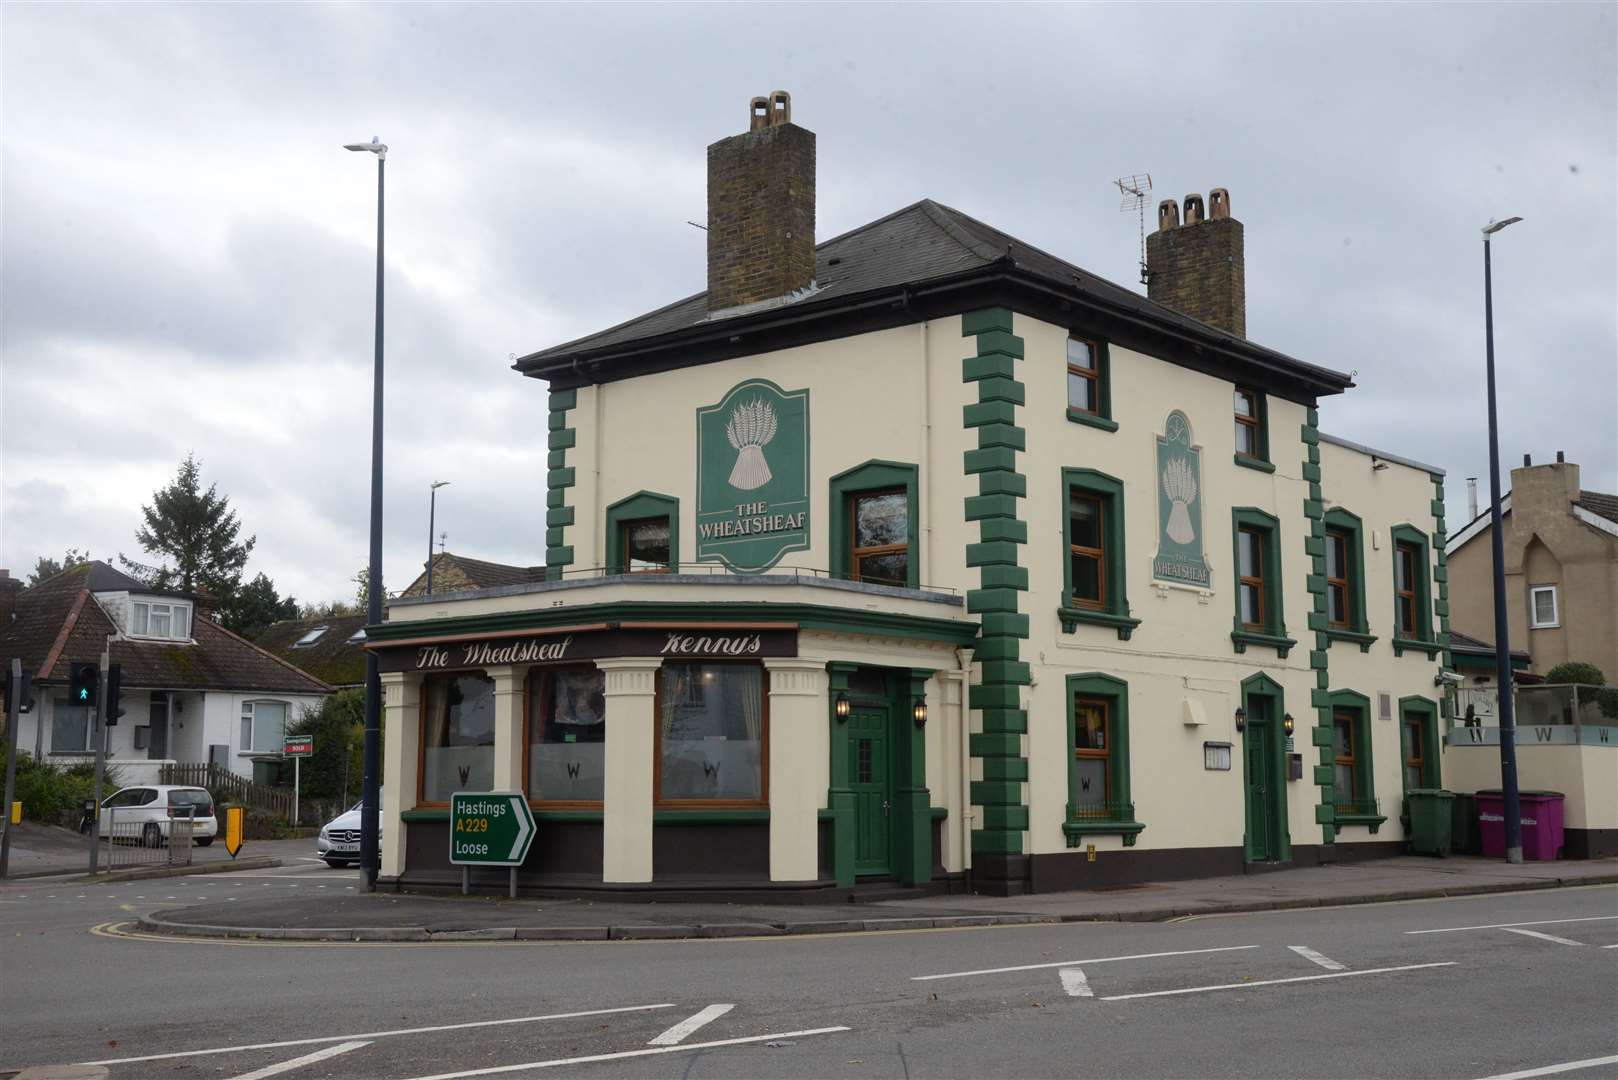 The once proud Wheatsheaf pub is soon to be demolished